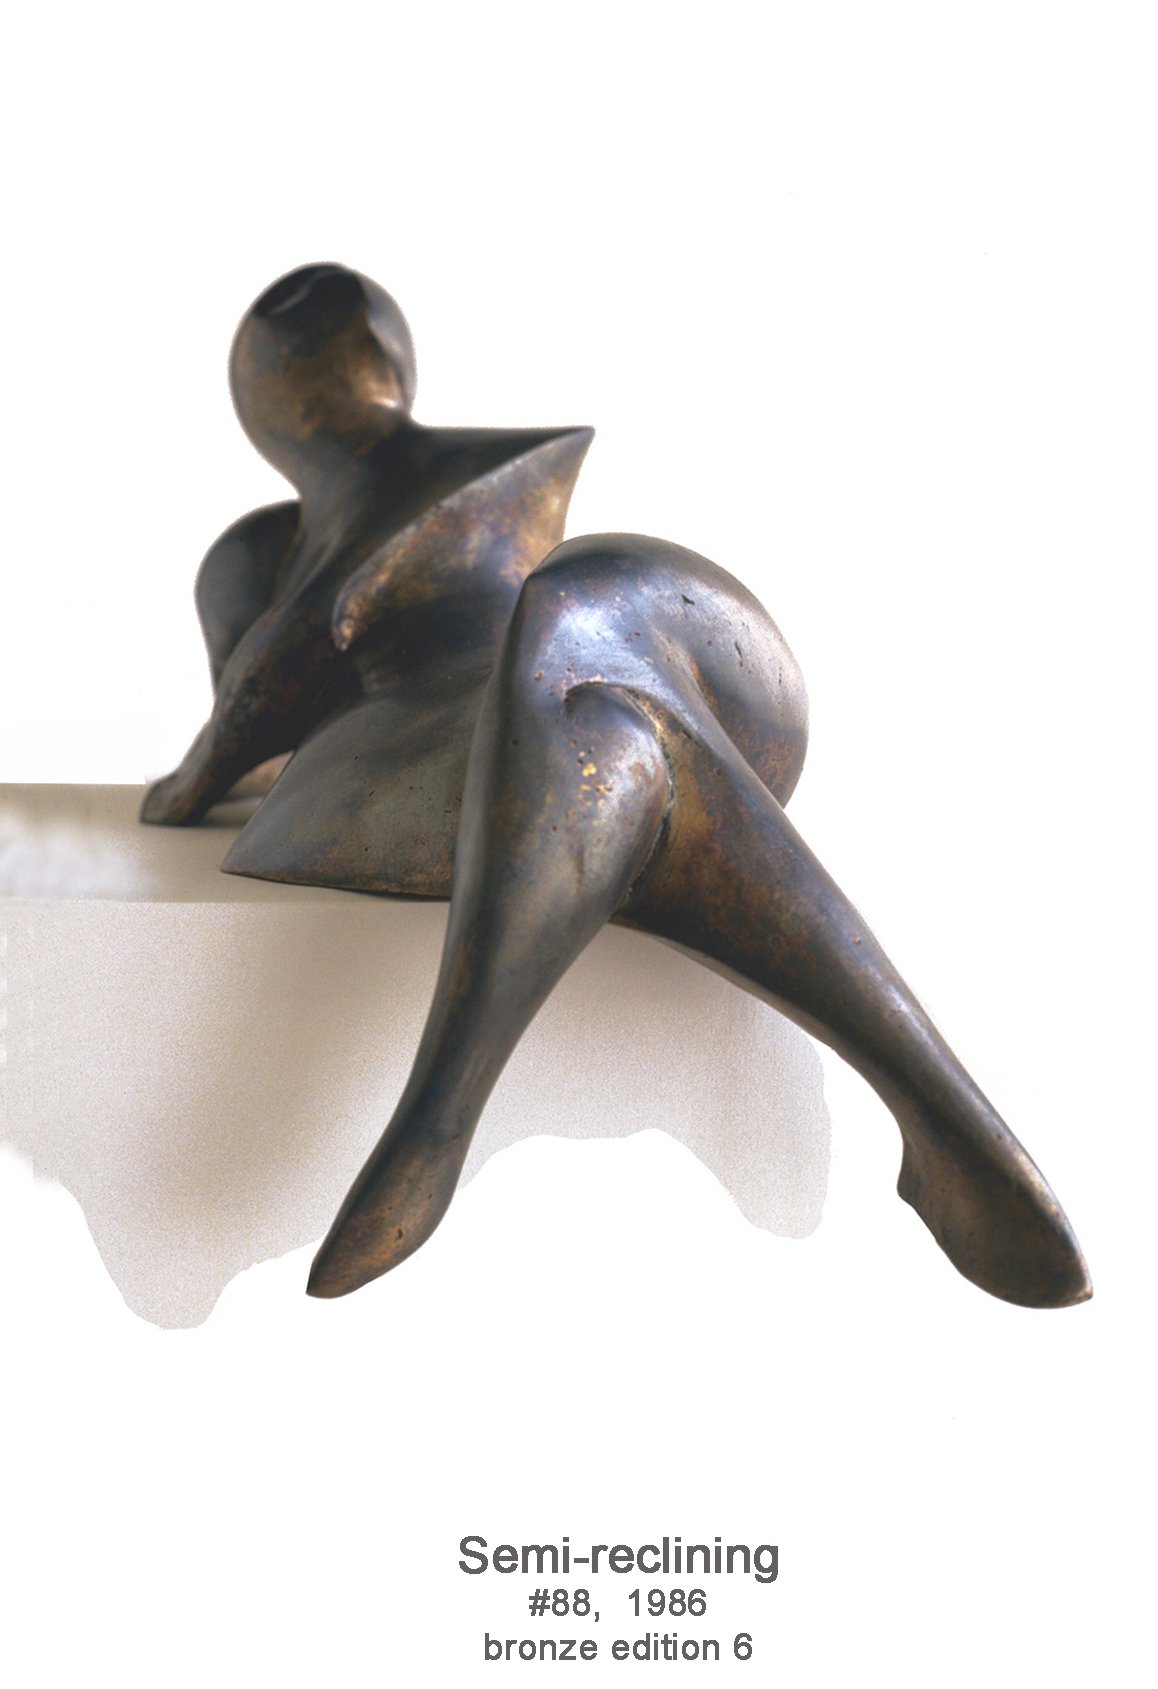 Semi-reclining, 1988, bronze edition 6, #88 